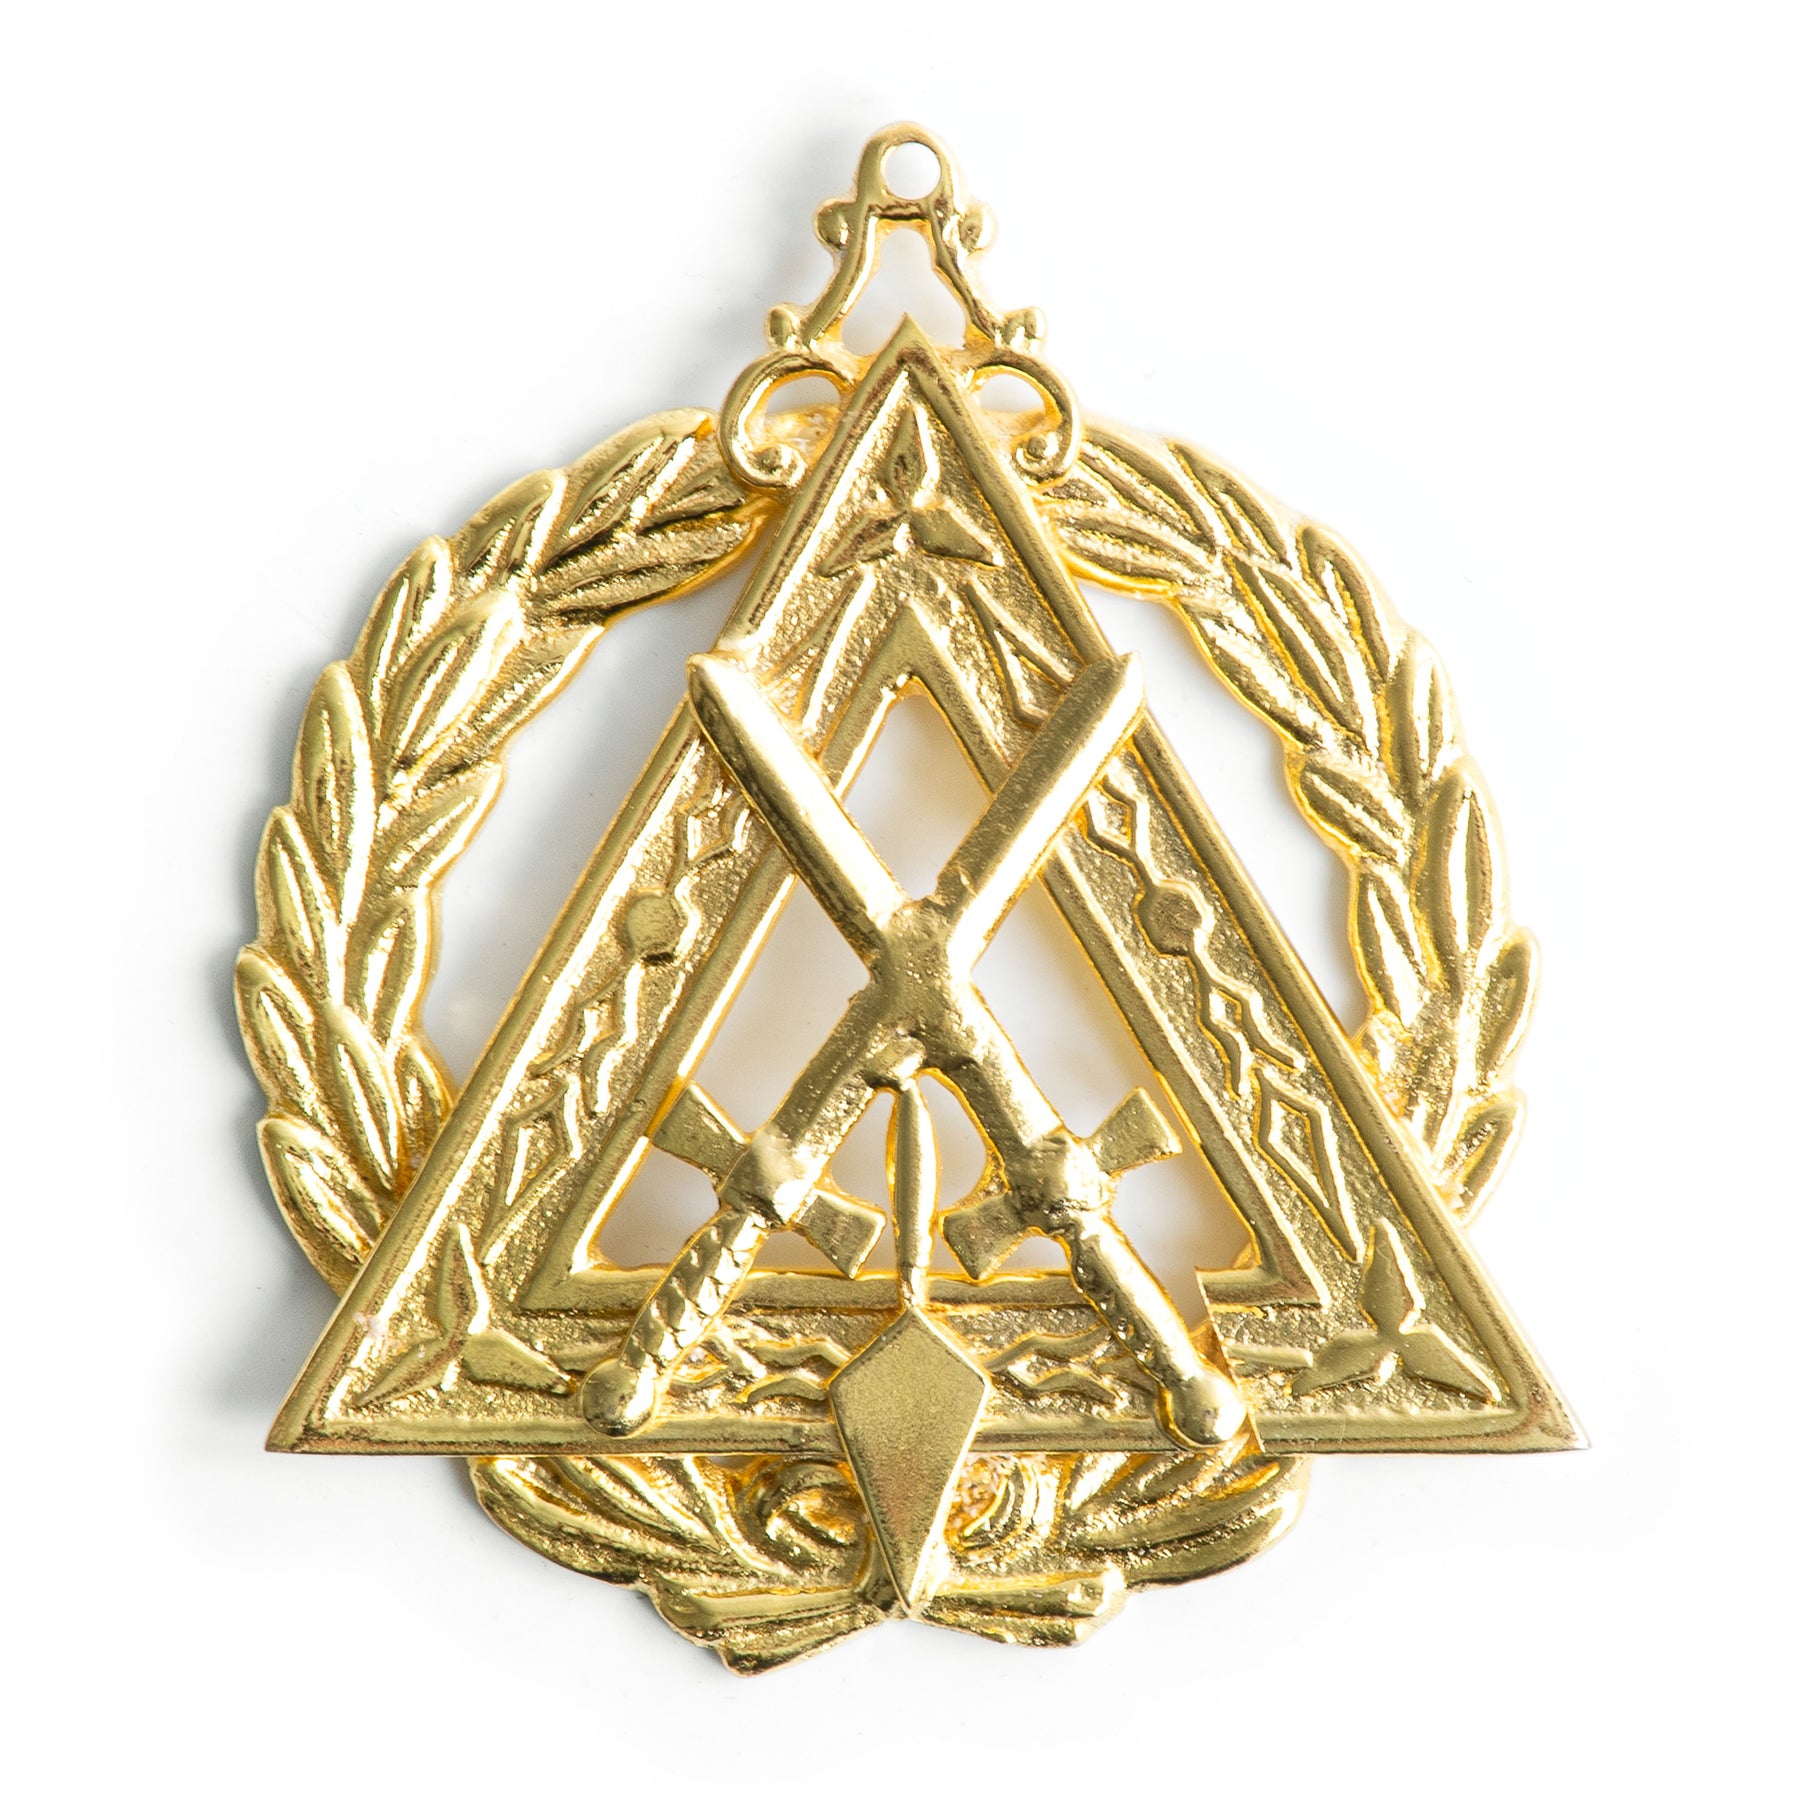 Grand Sentinel Royal & Select Masters Officer Collar Jewel - Gold Plated - Bricks Masons